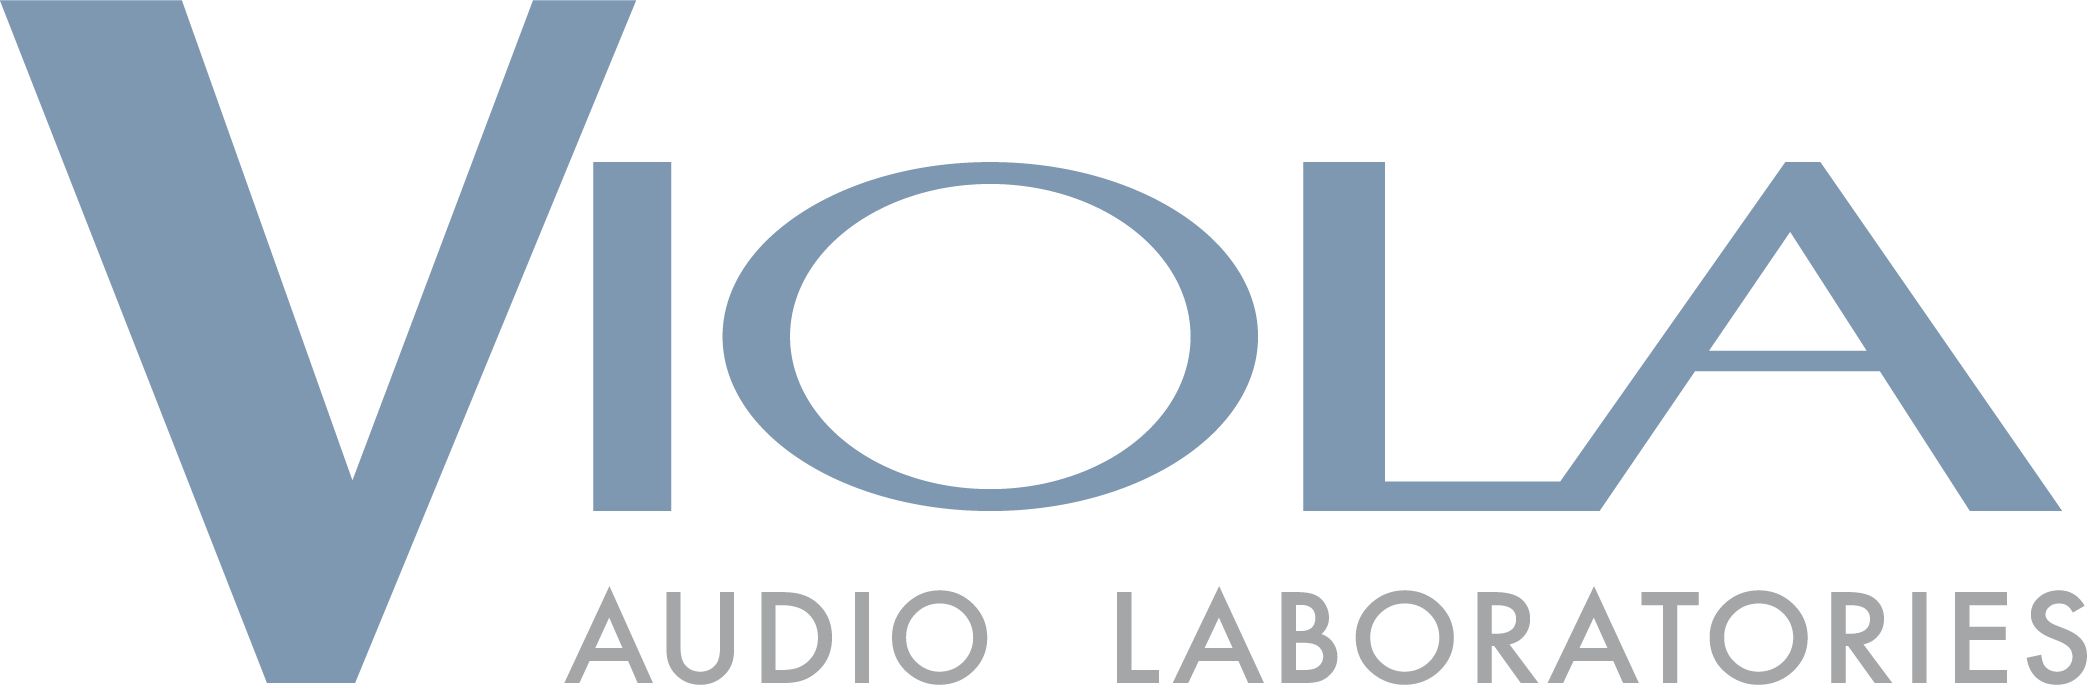 Viola Audio Labs logo